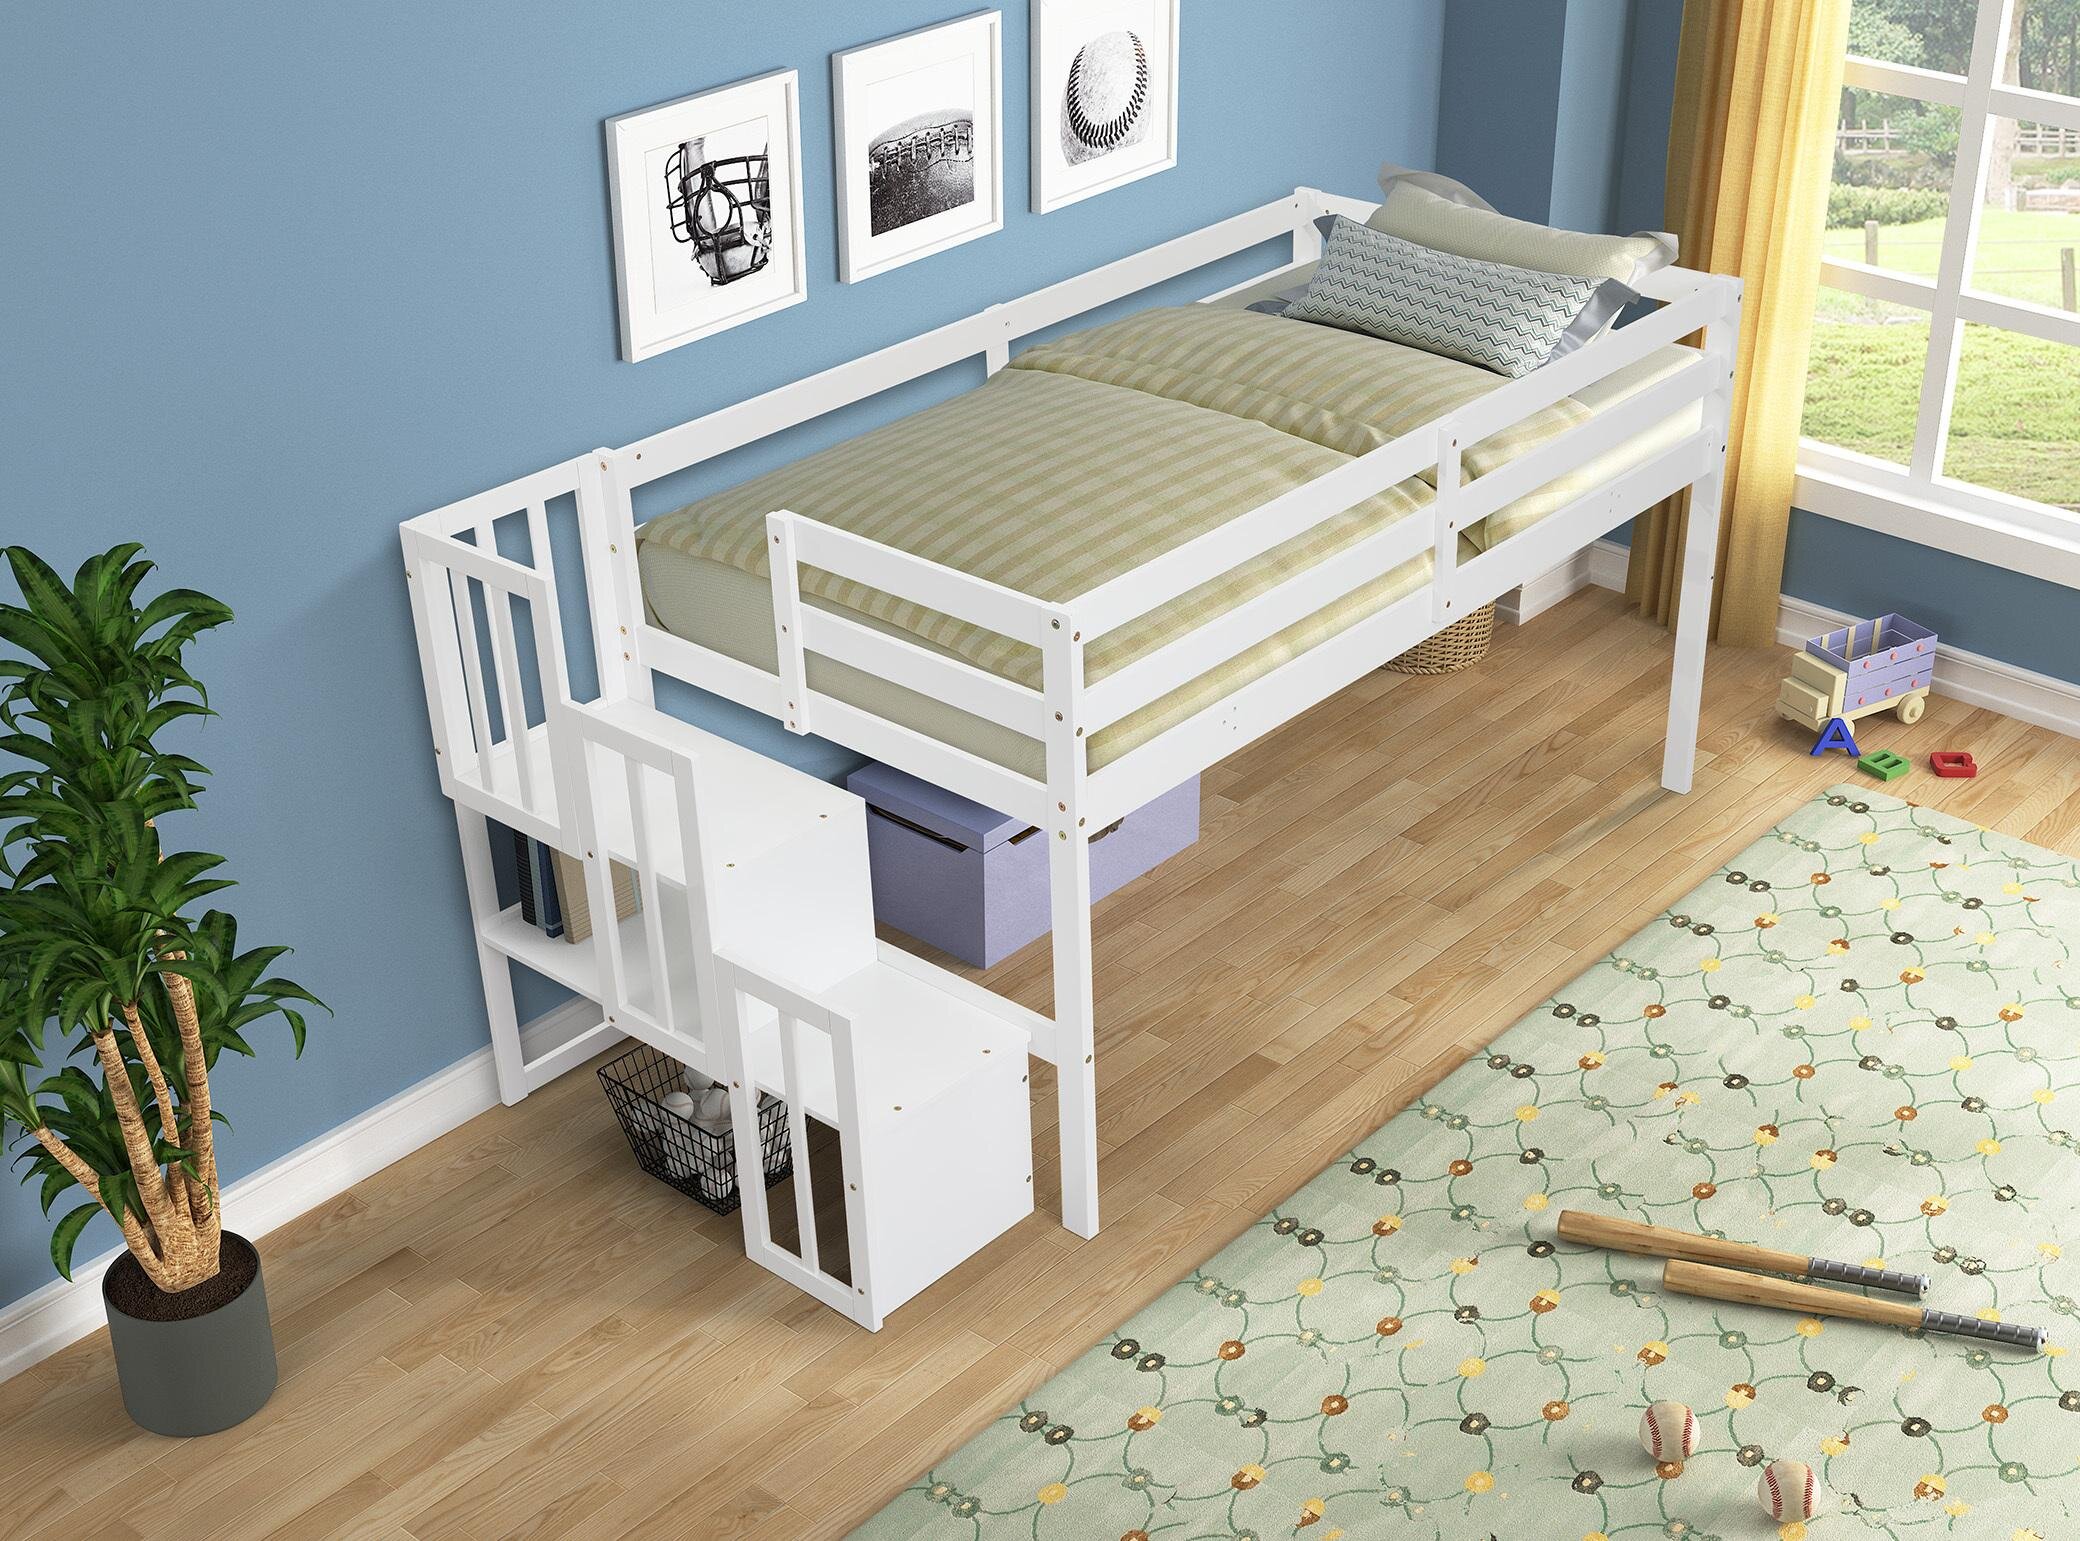 Rotating round bedLetto rotondo girevole- Home, Furniture, Bed